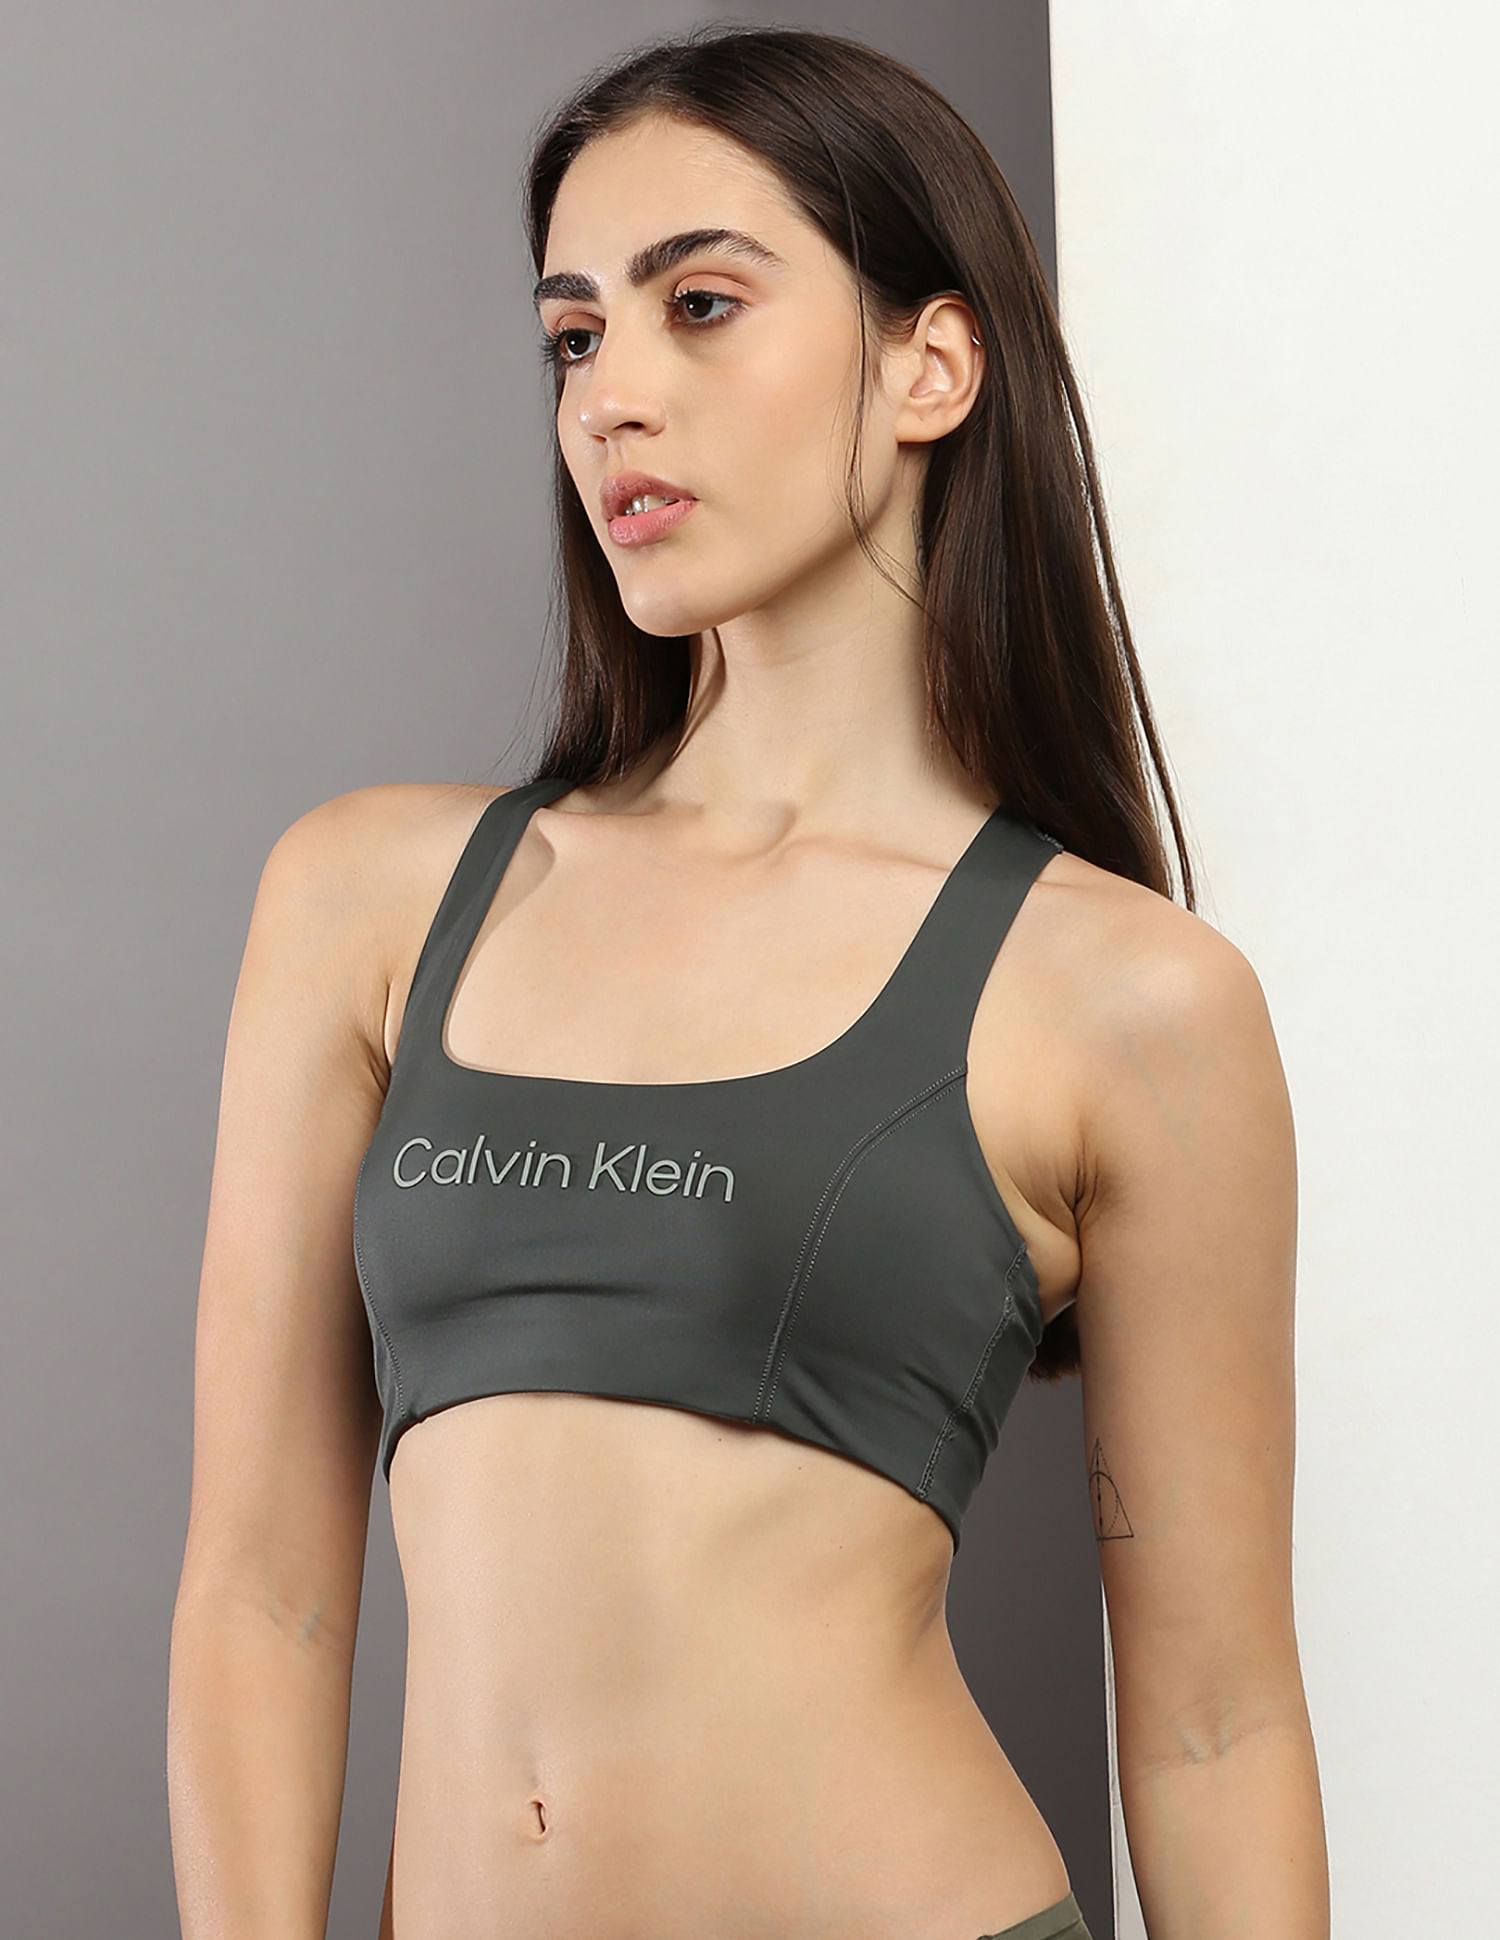 Calvin Klein Performance Women's Medium-Impact Bra, Golden, Size S